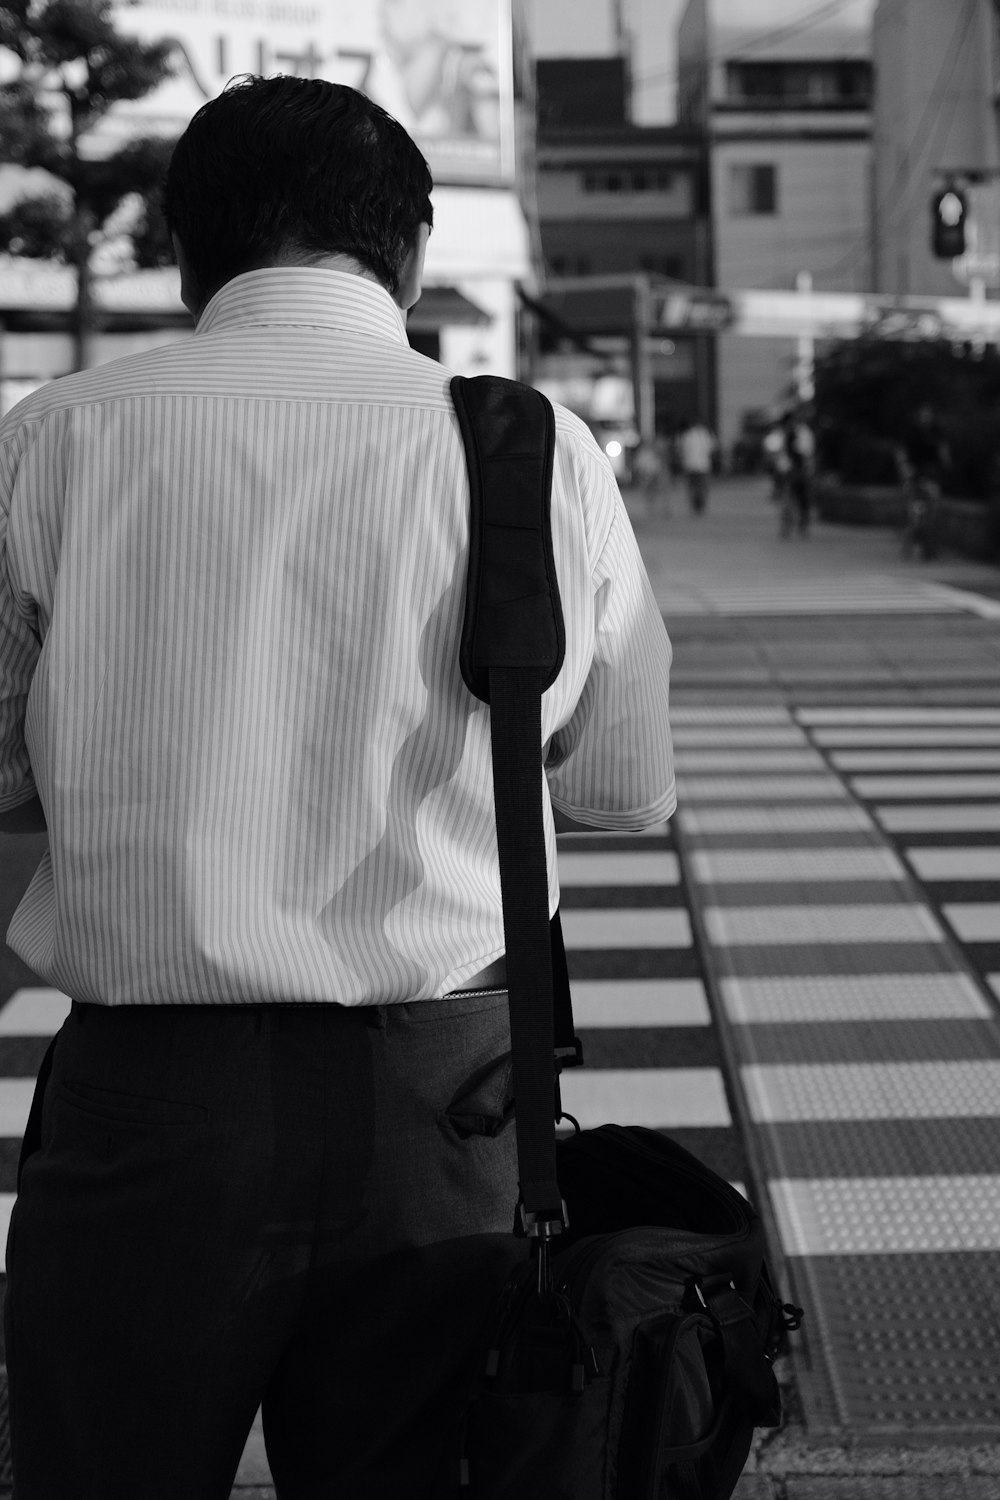 Fotografía en escala de grises de un hombre que lleva una bolsa